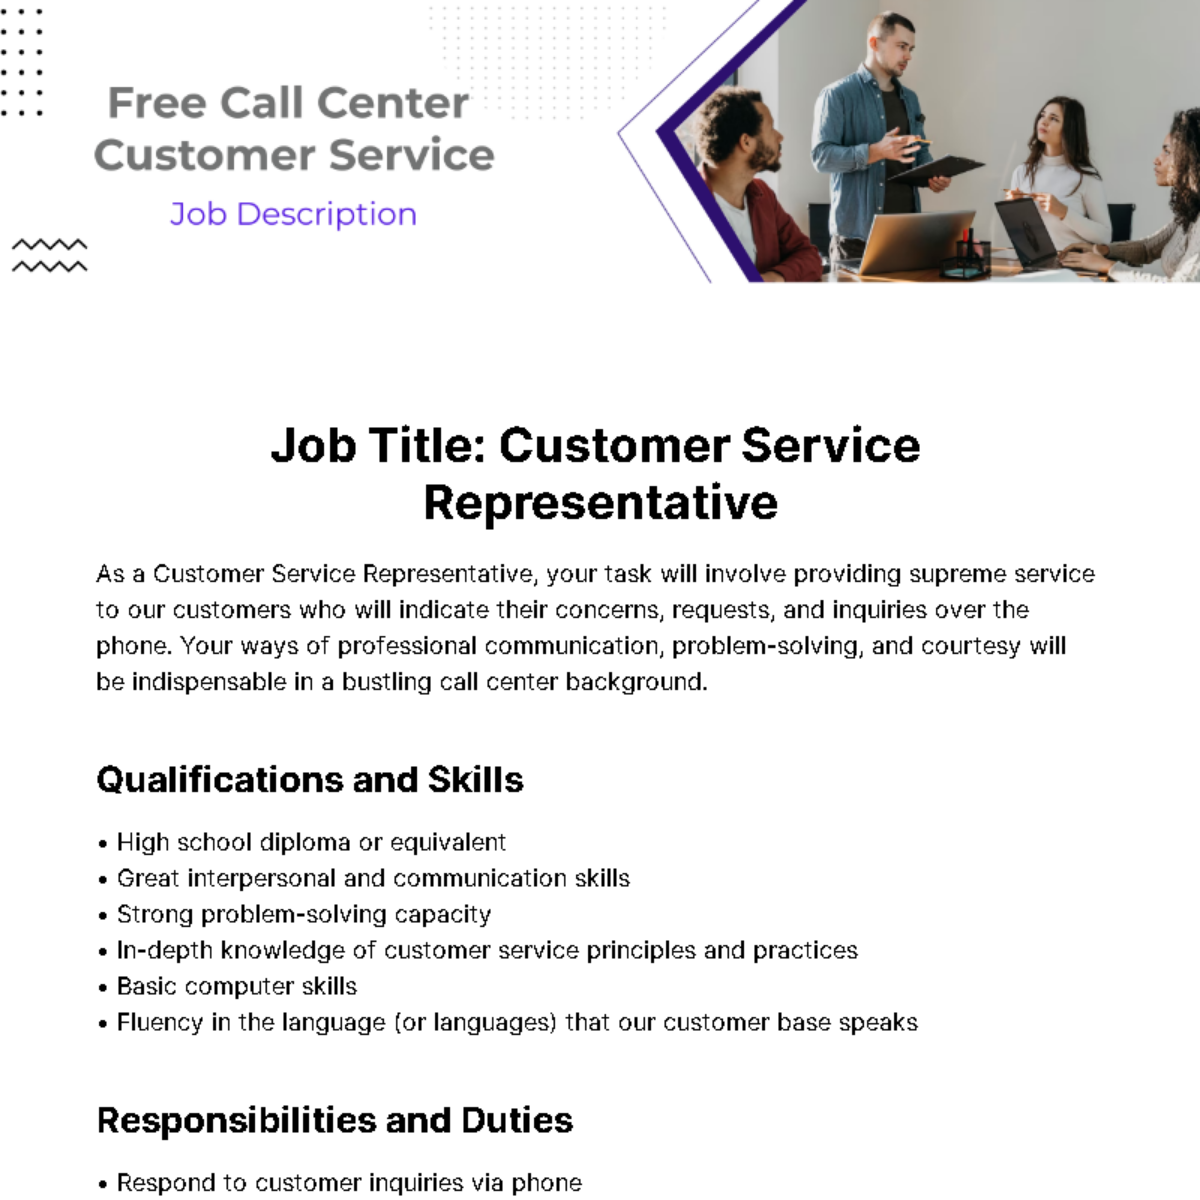 Free Call Center Customer Service Job Description Template